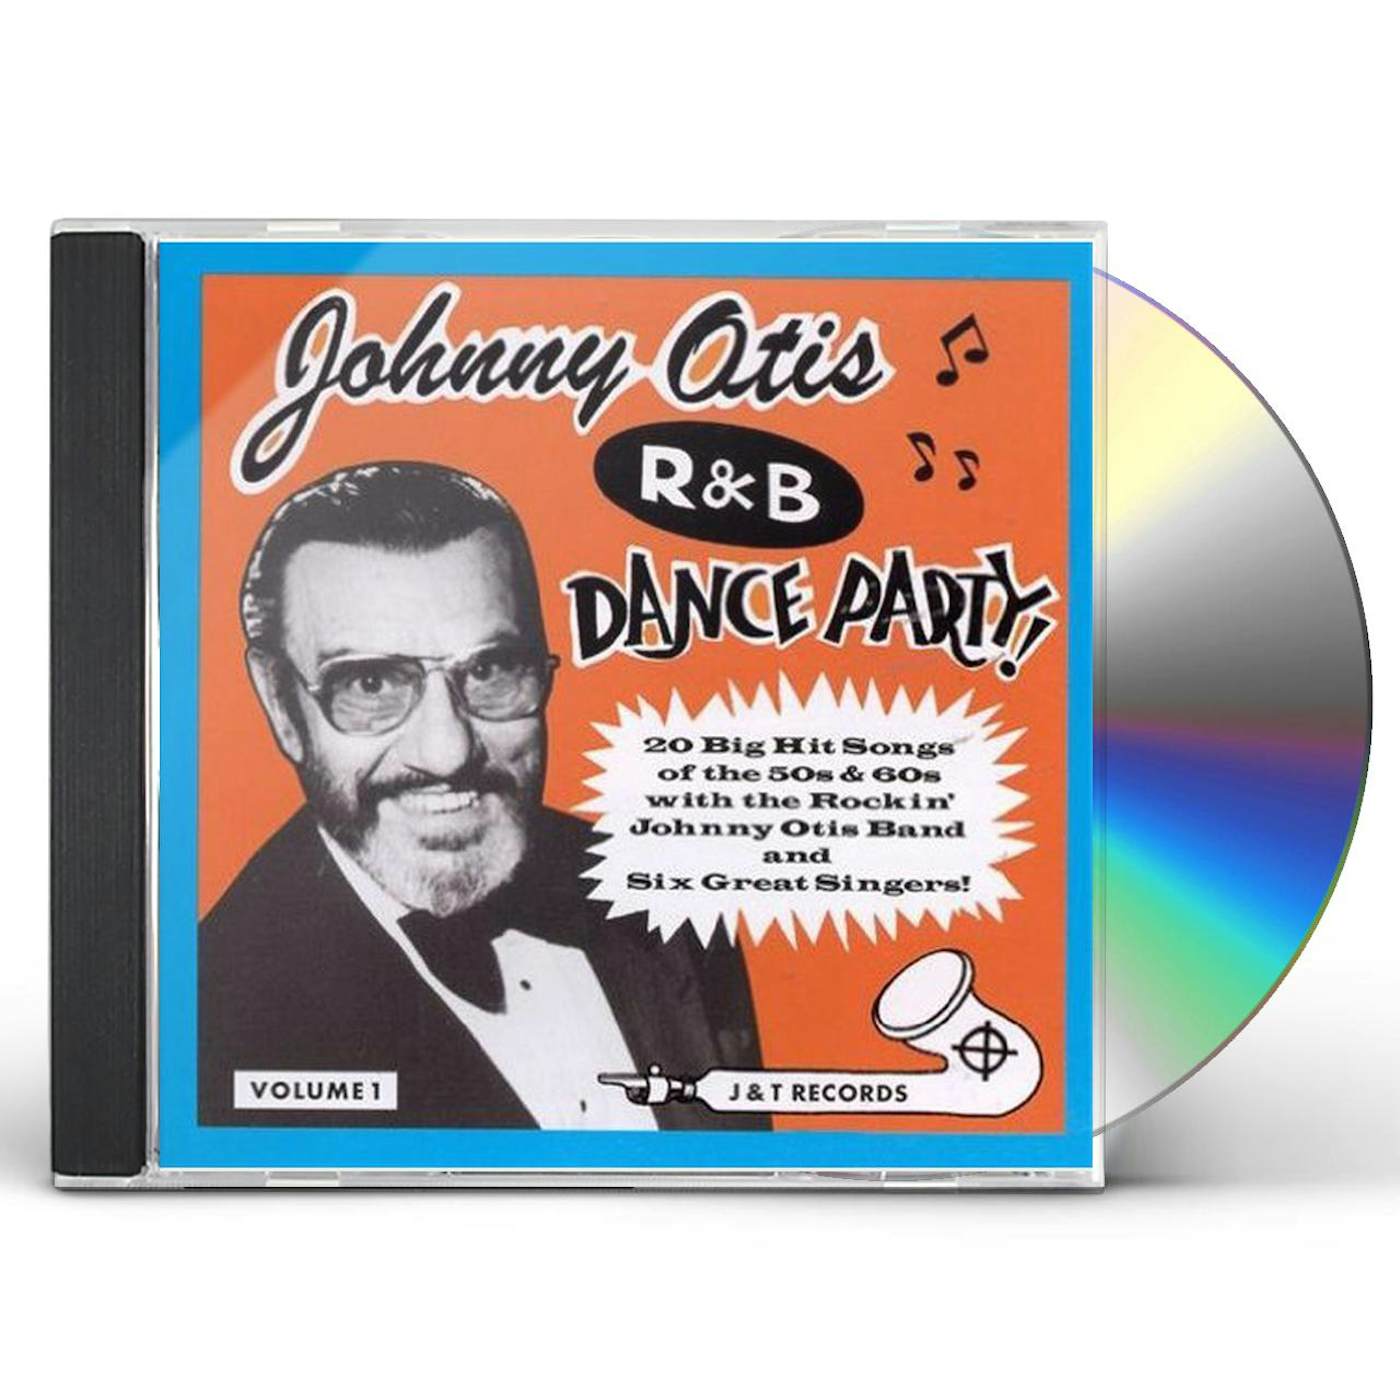 JOHNNY OTIS R&B DANCE PARTY 1 CD